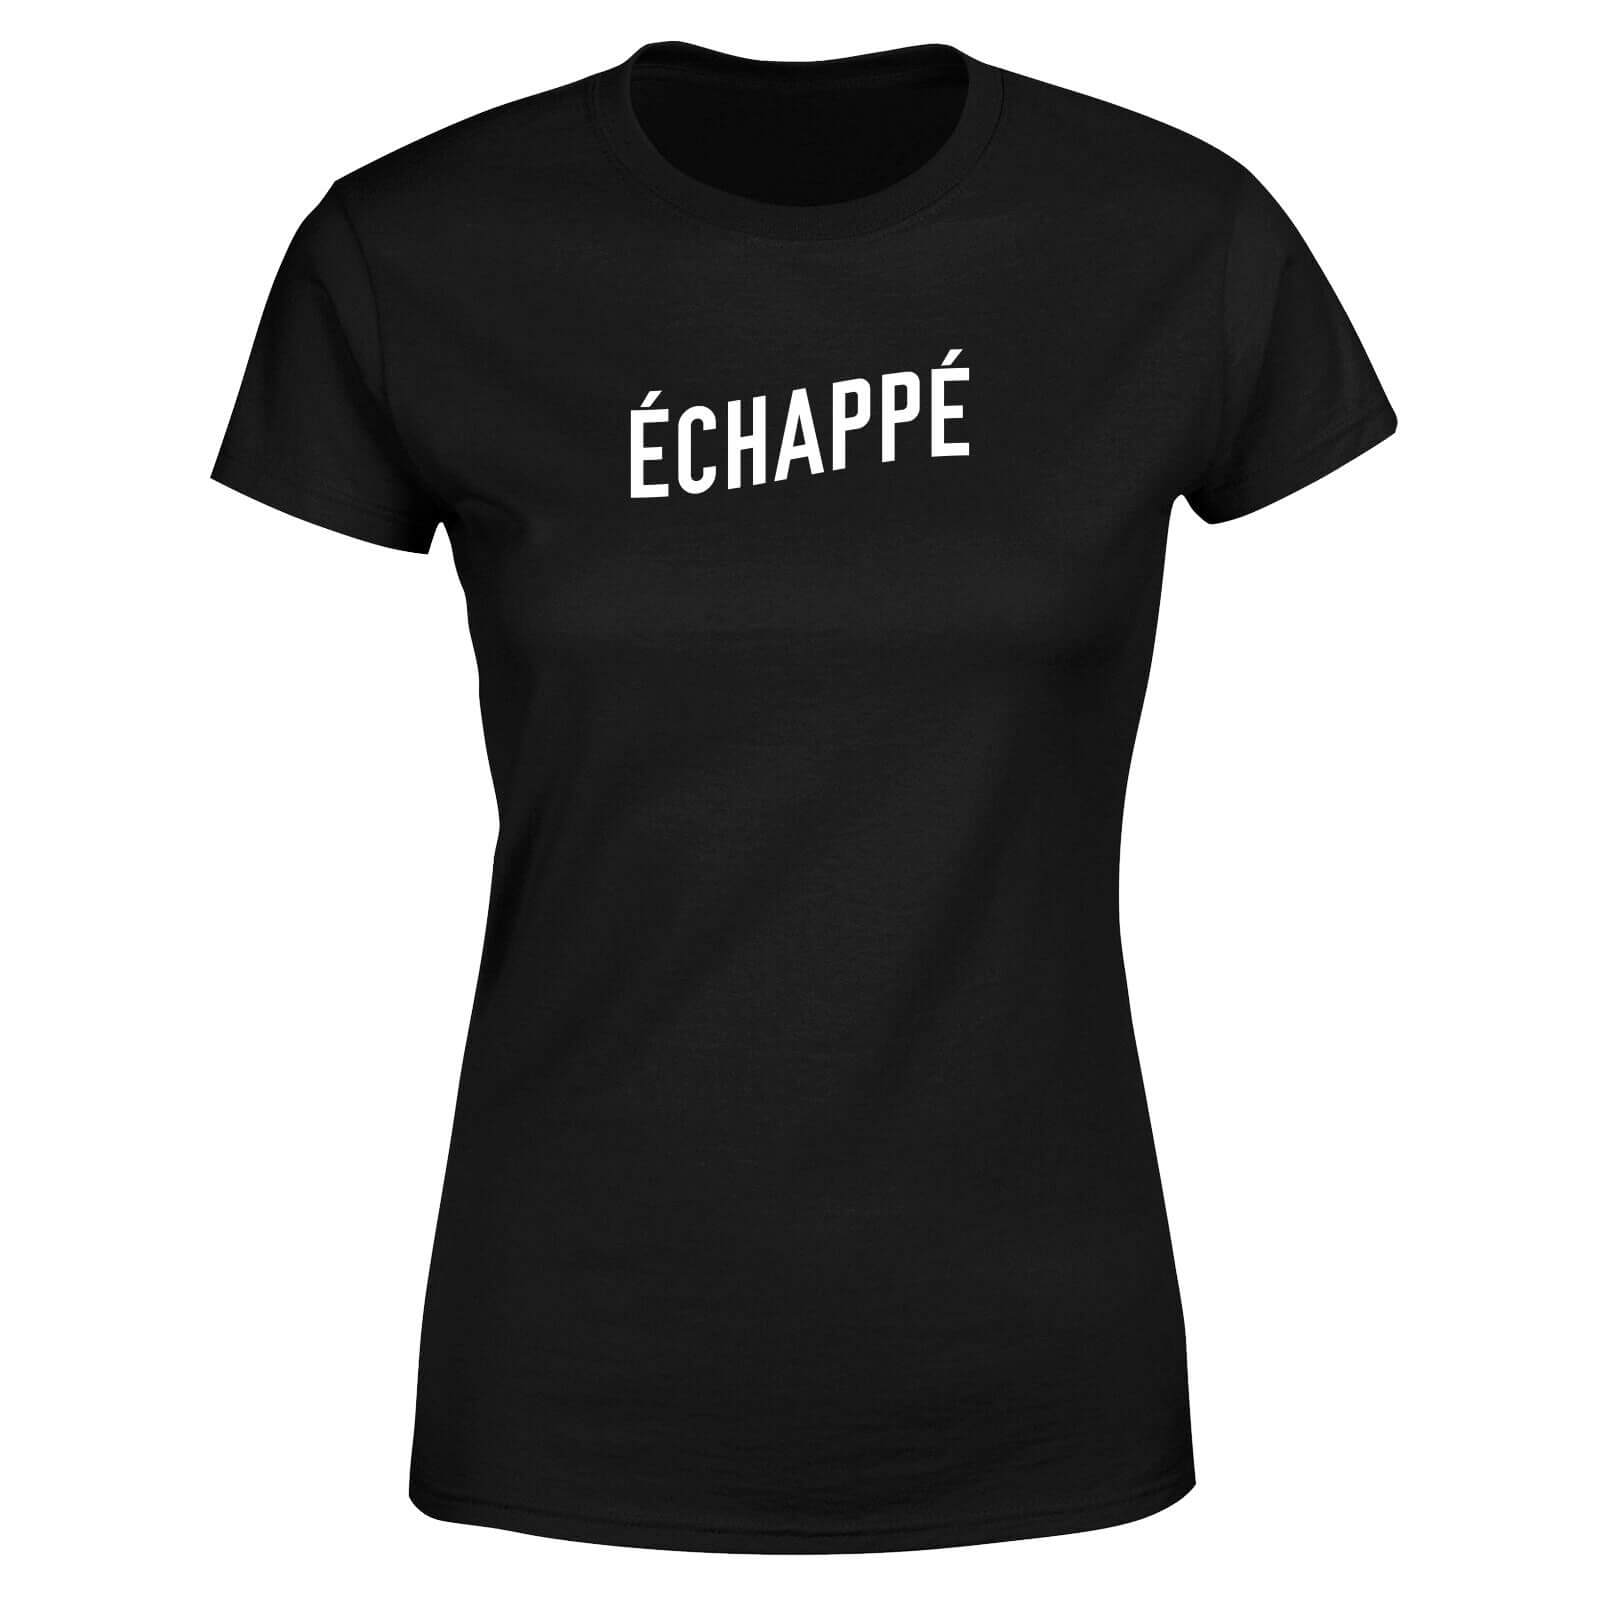 Echappe Women's T-Shirt - Black - XL - Black